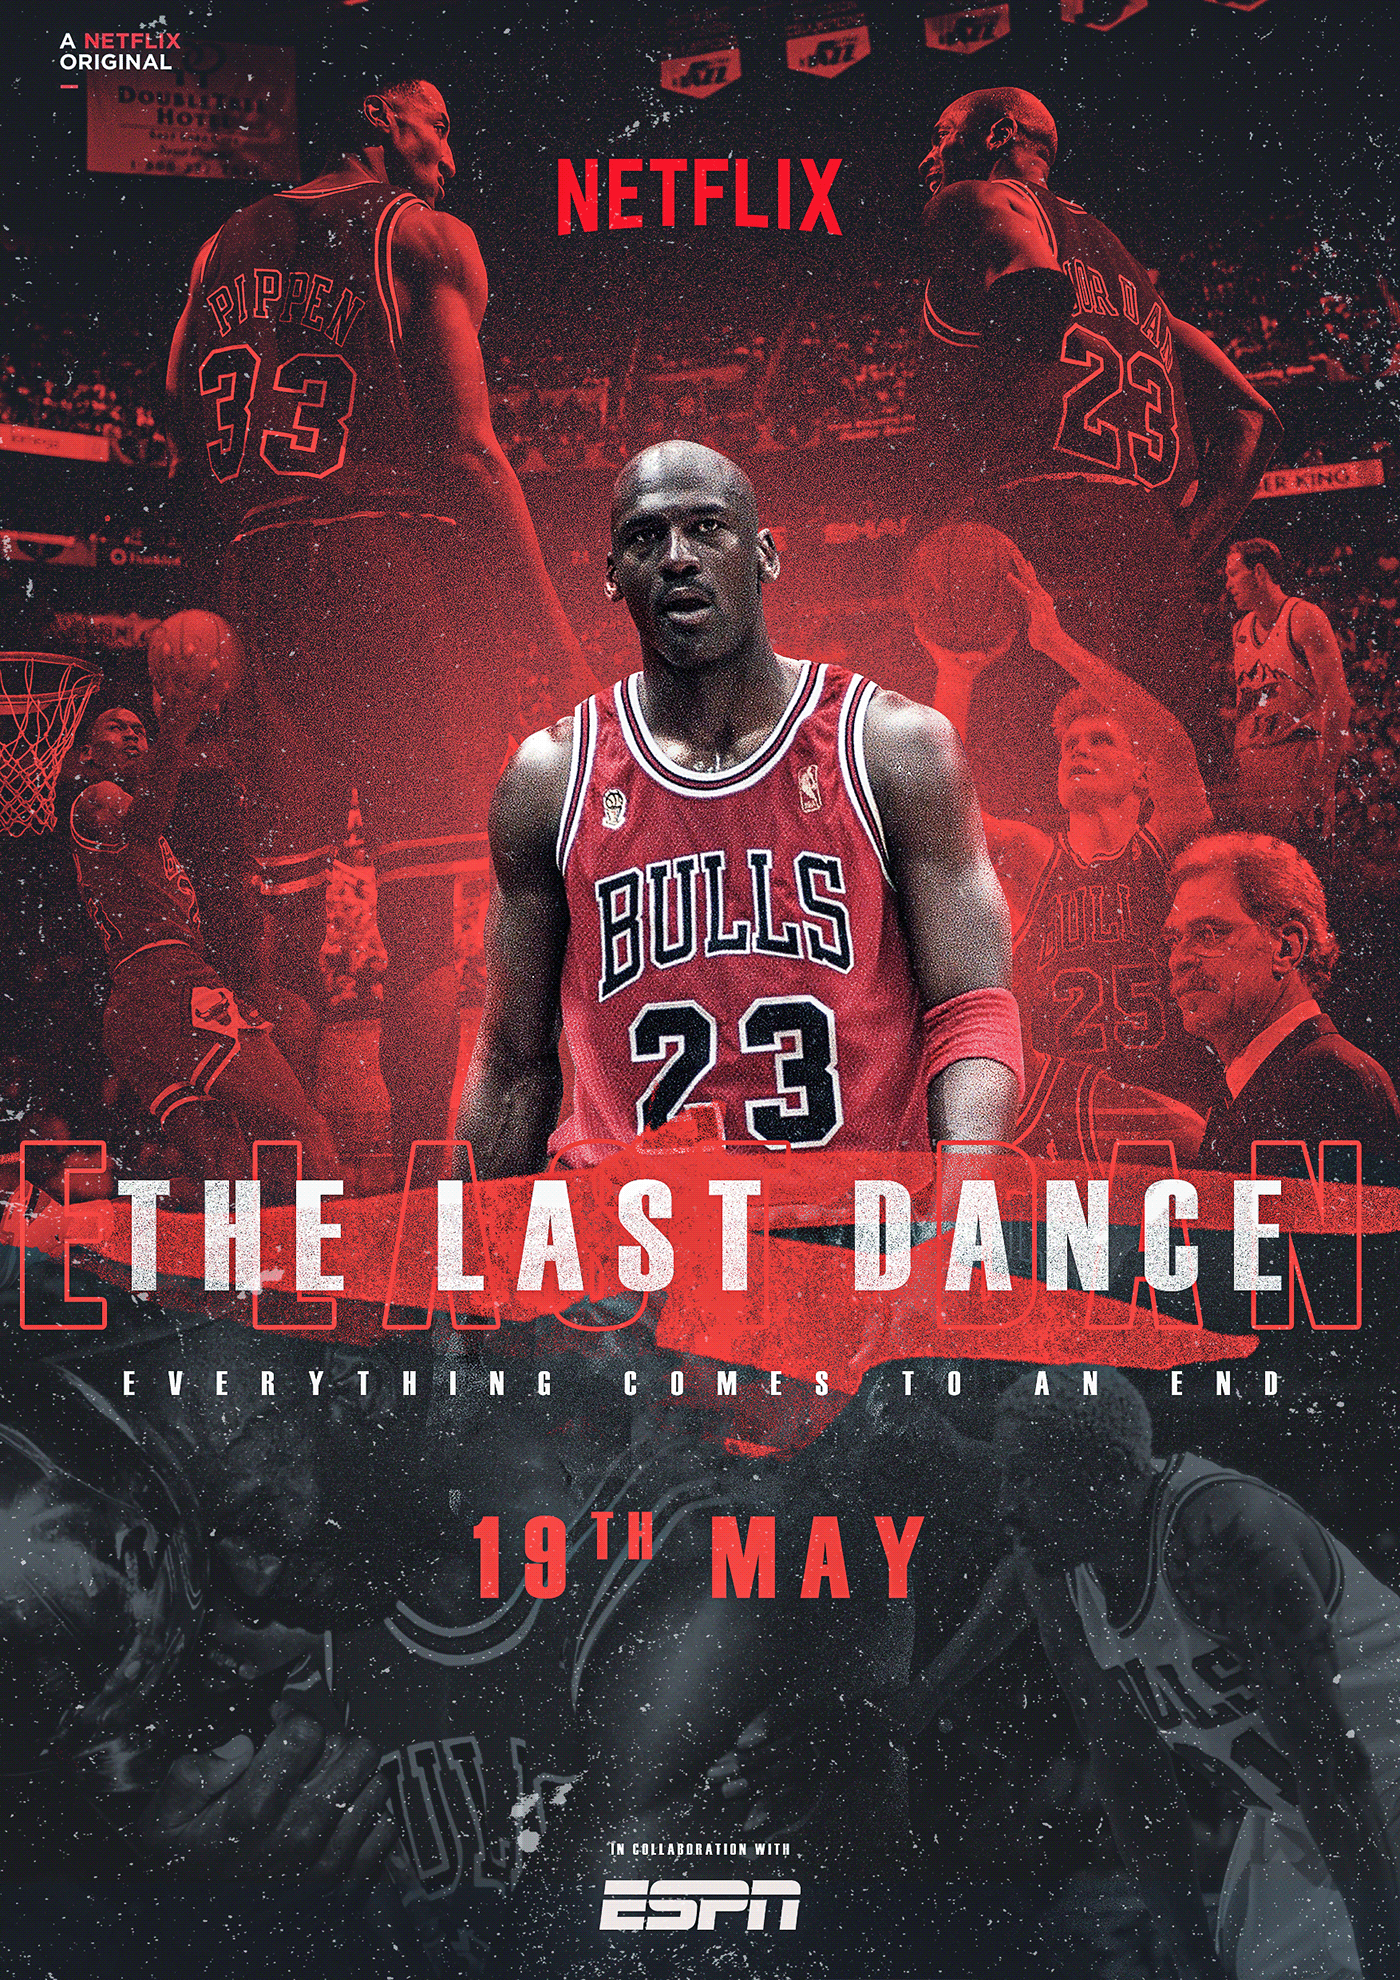 LAST DANCE [DVD]